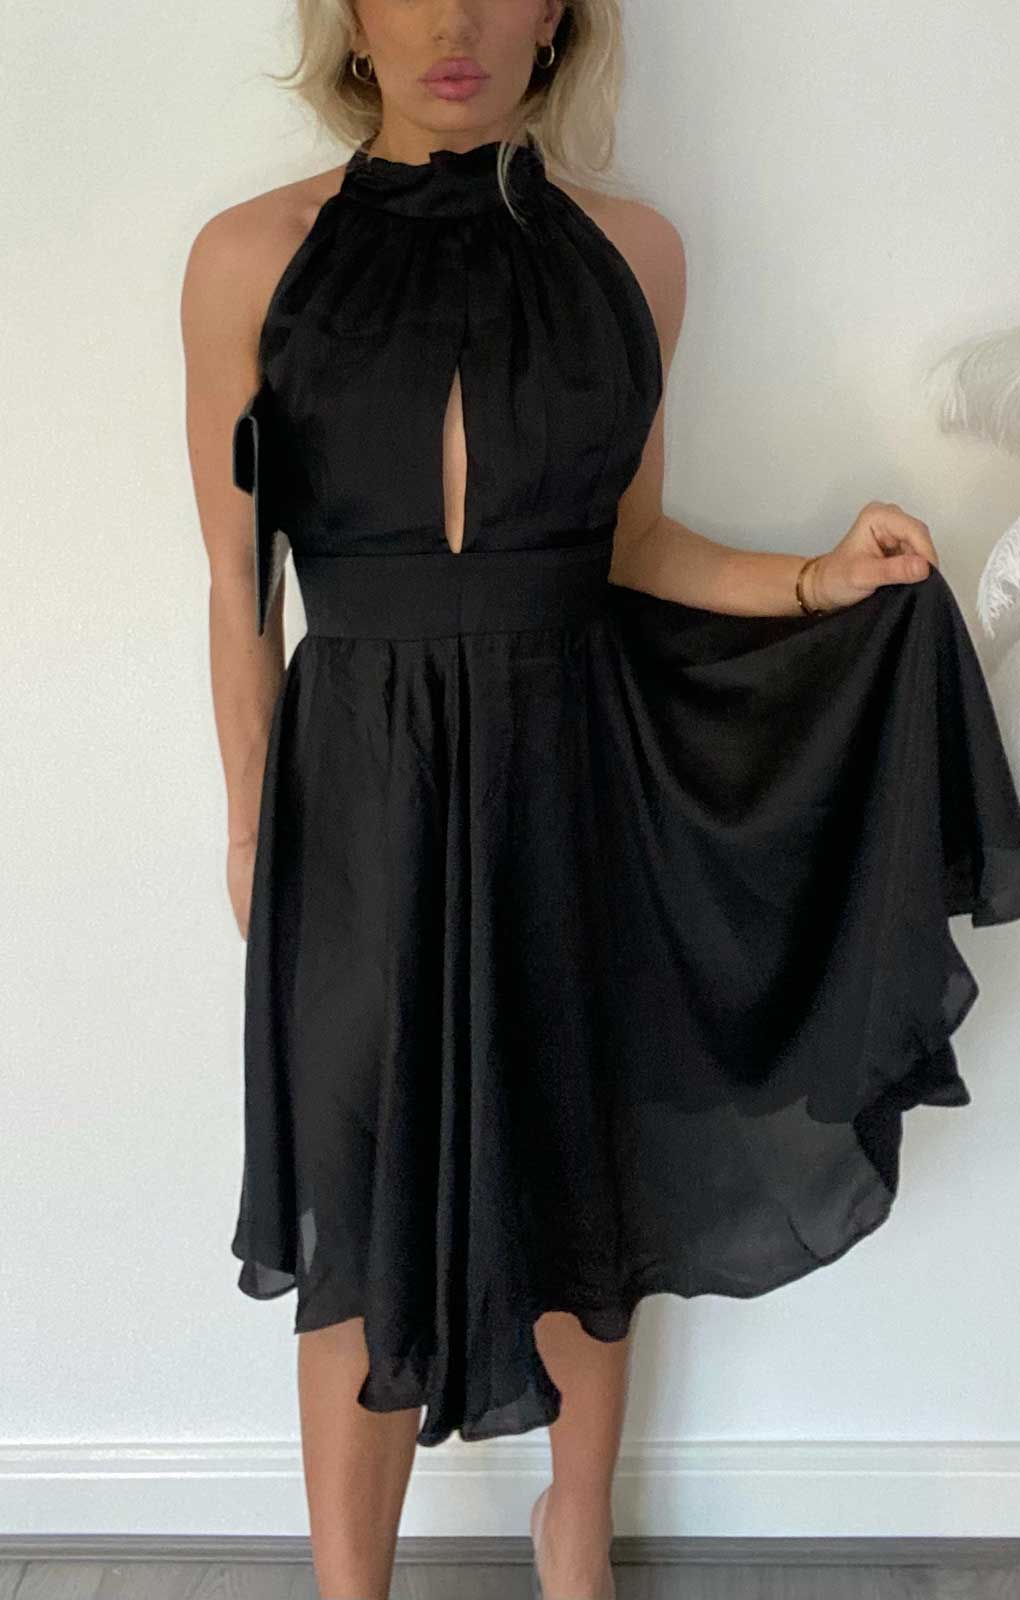 House of Zana Marilyn in Black Dress